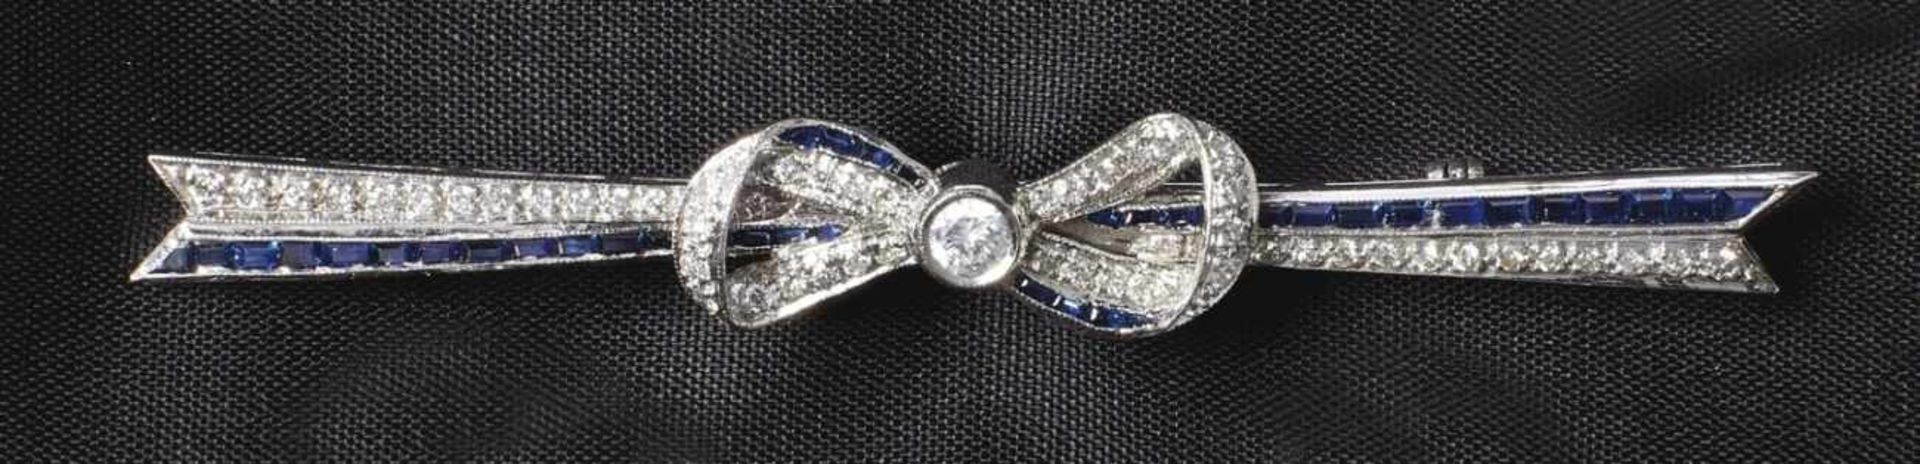 Brilliant sapphire brooch